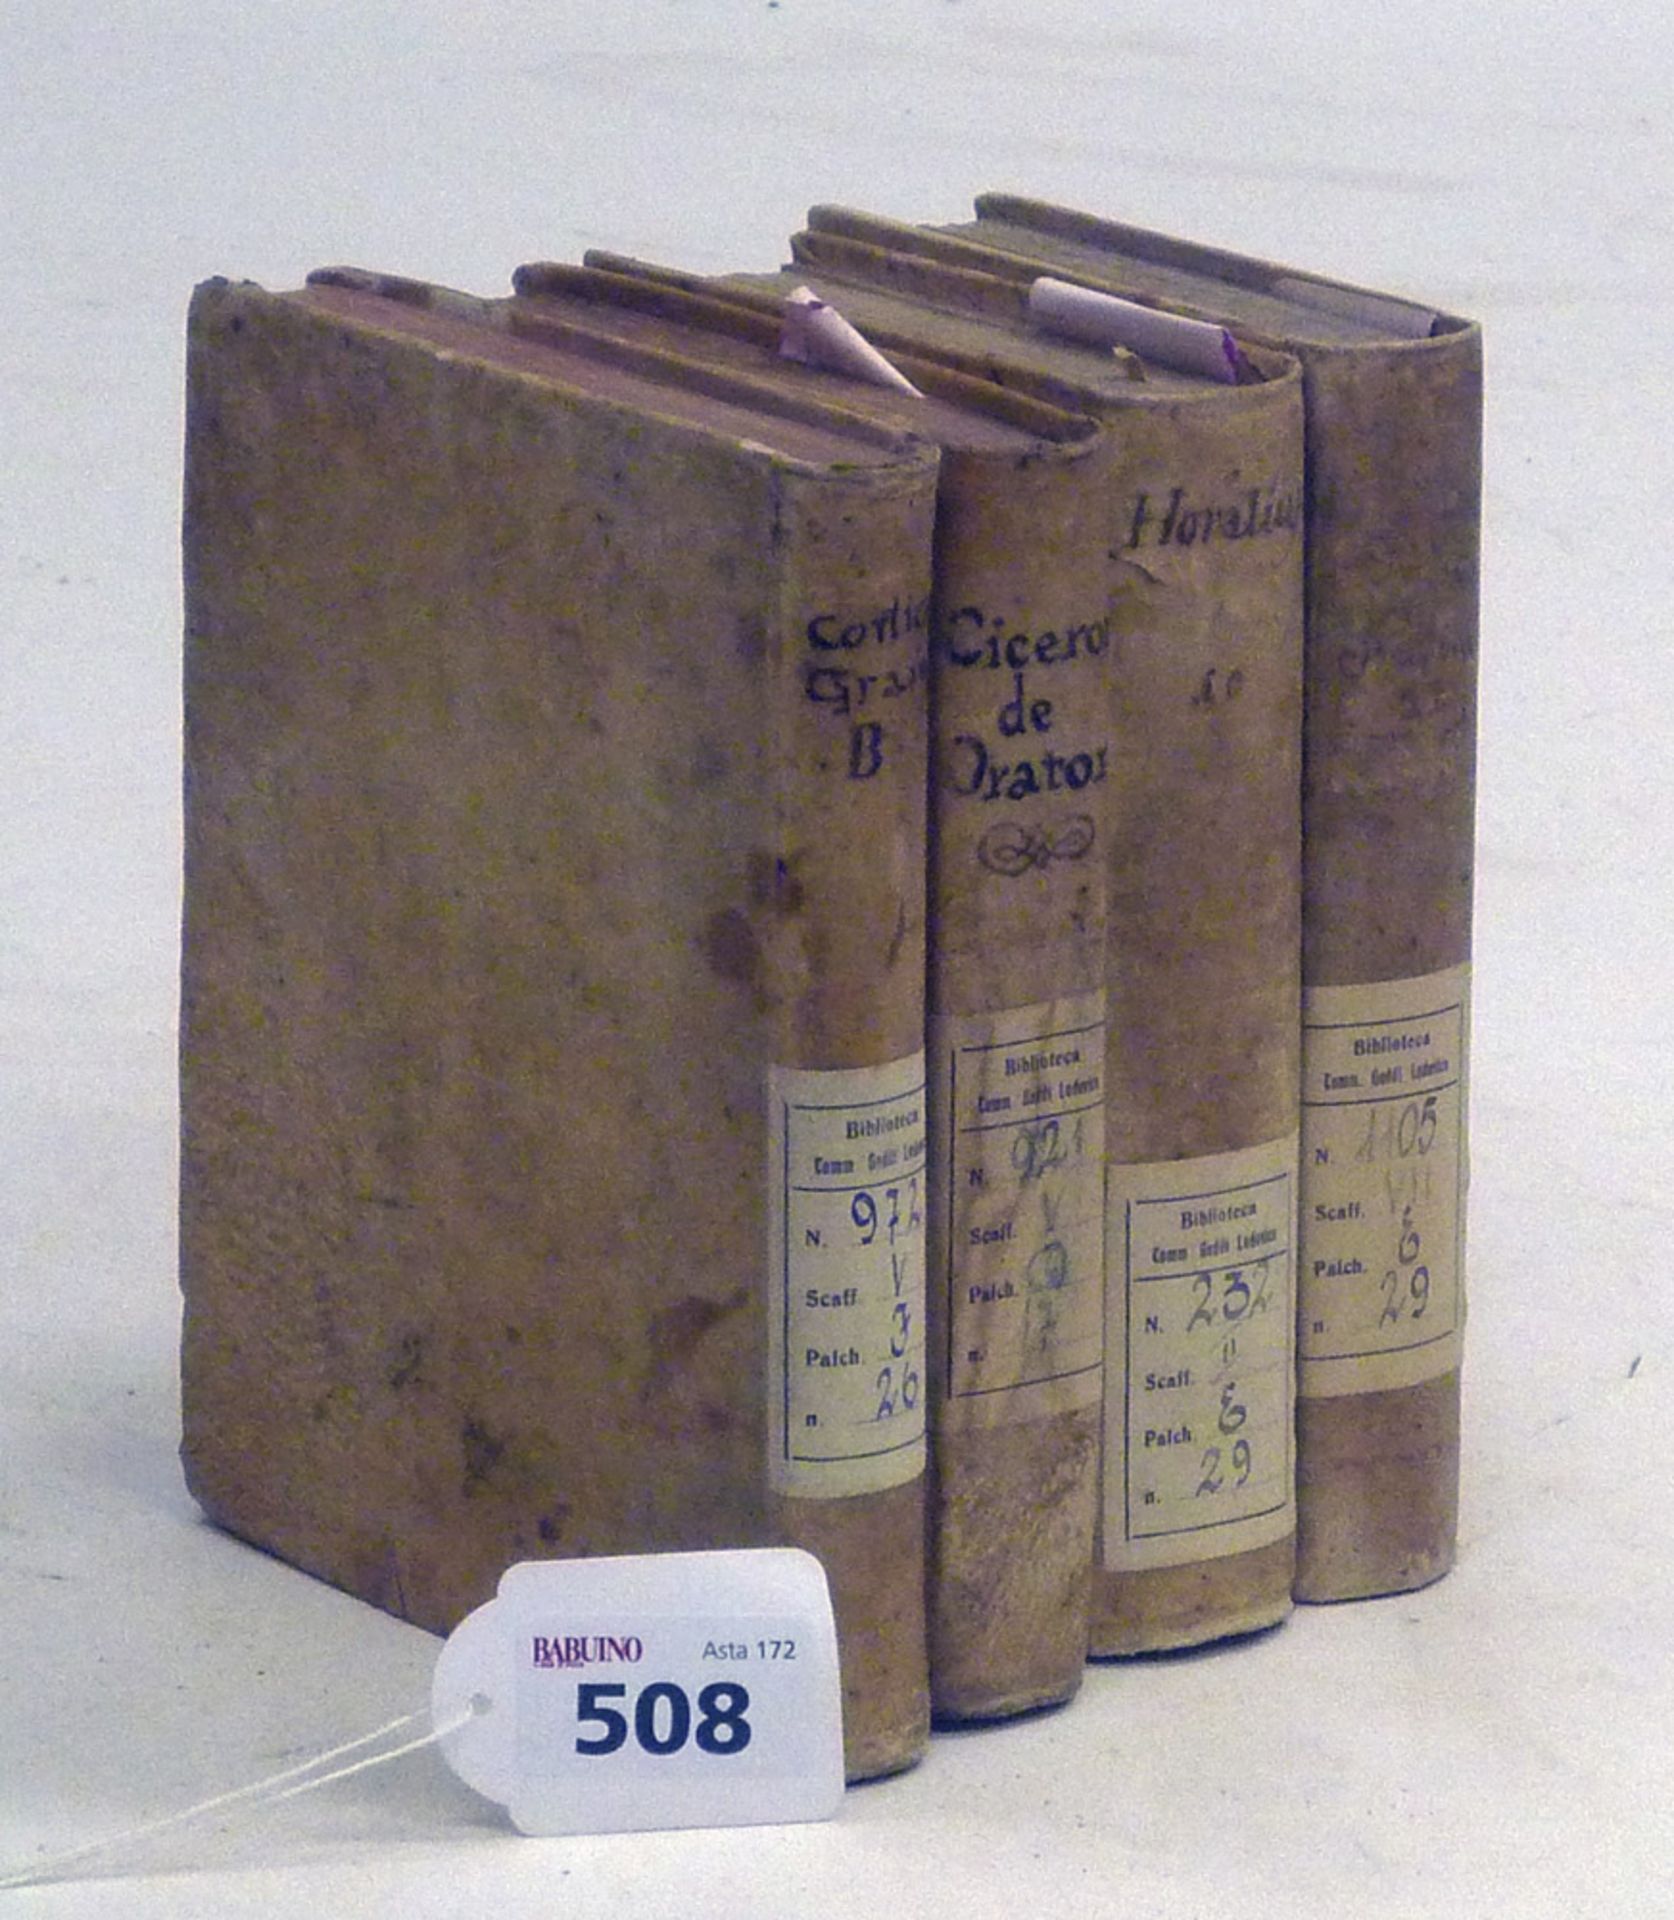 CLASSICAL Cicero, Orazio Flacco, Ovidio Nasone. Four volumes. Ed. seven hundred and eight hundred.